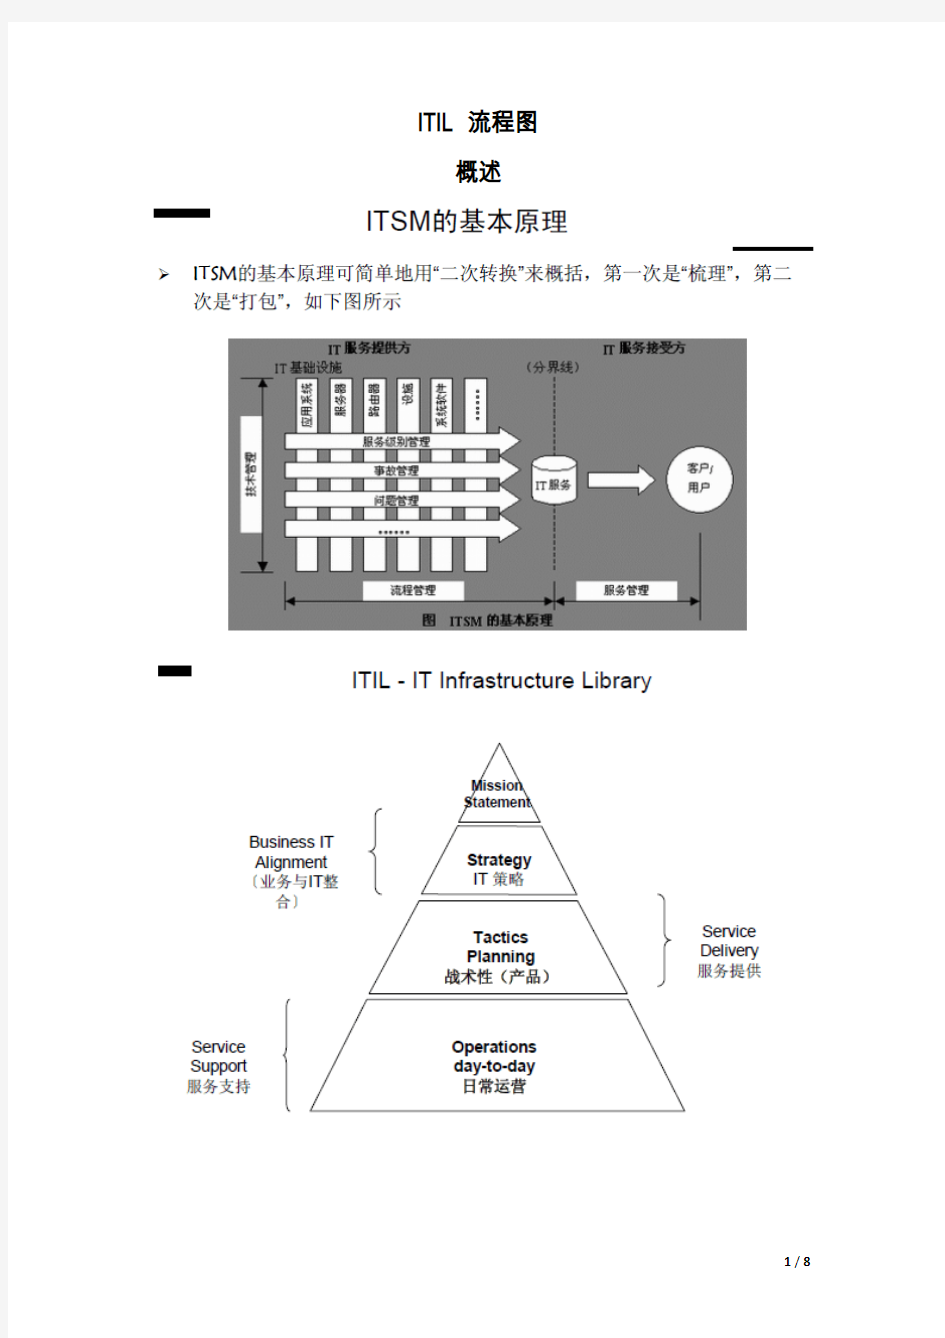 ITIL 流程图汇总(中文)